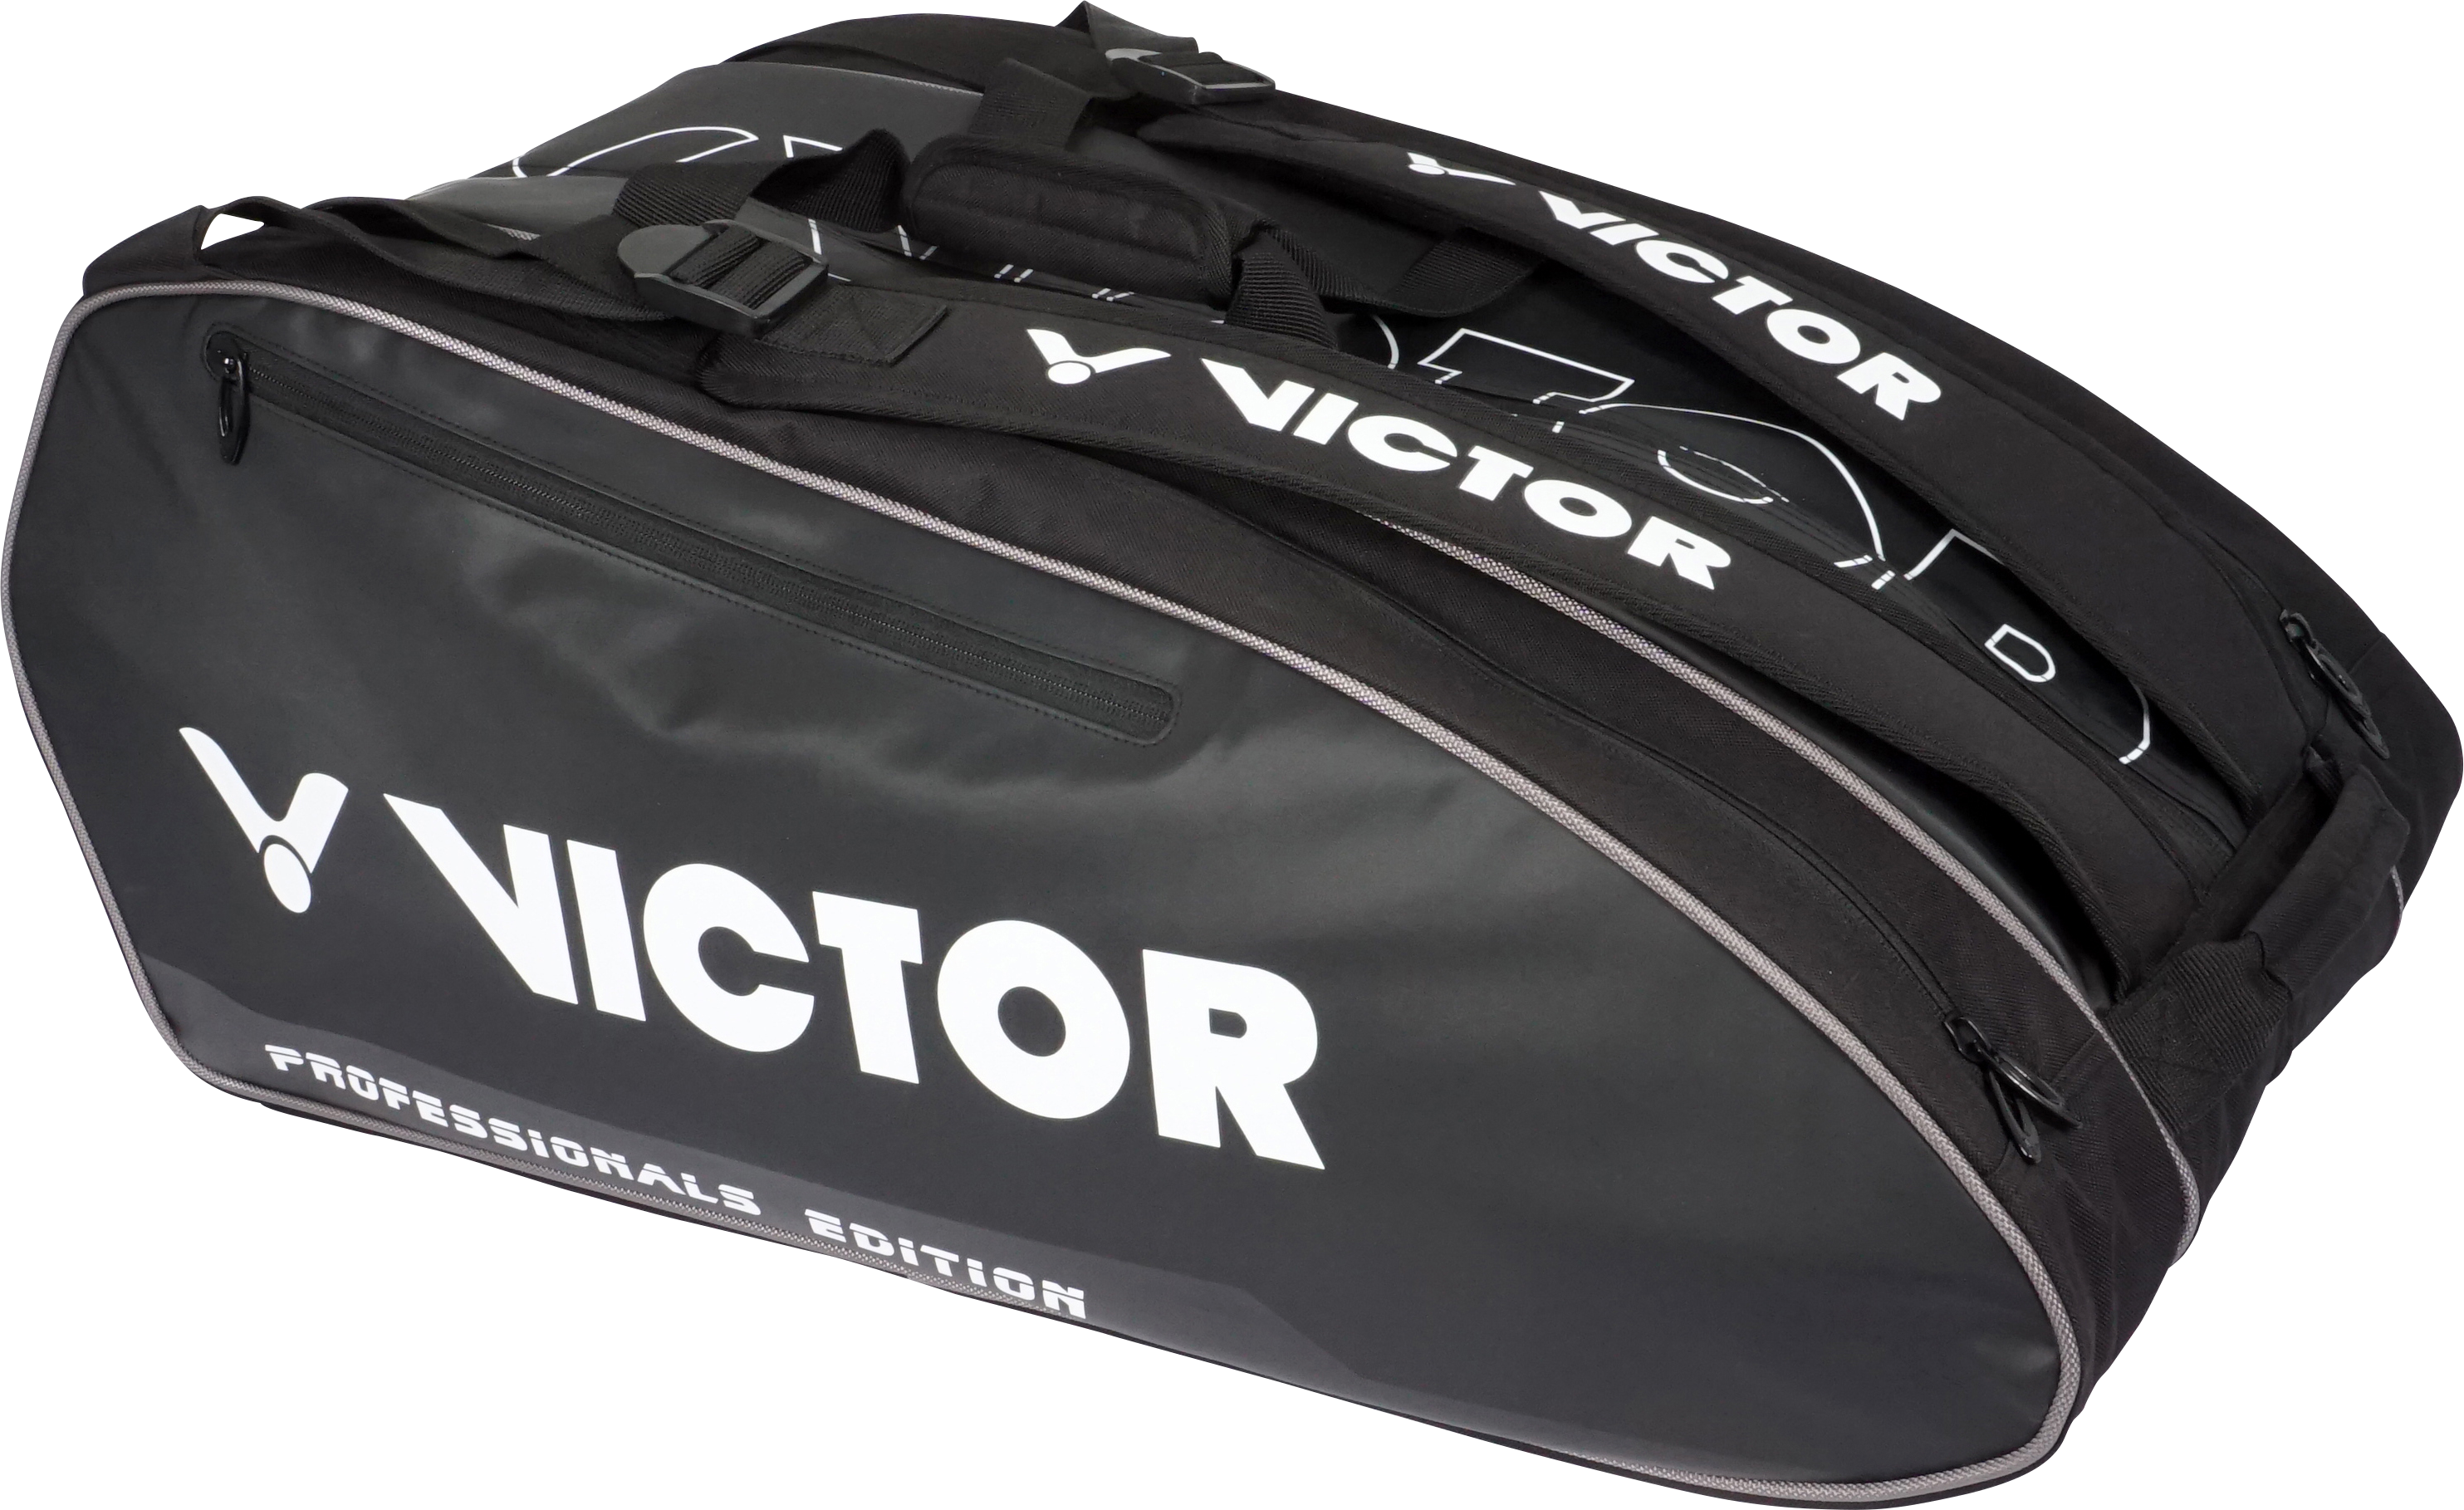 VICTOR Badminton Racket Bag NZ